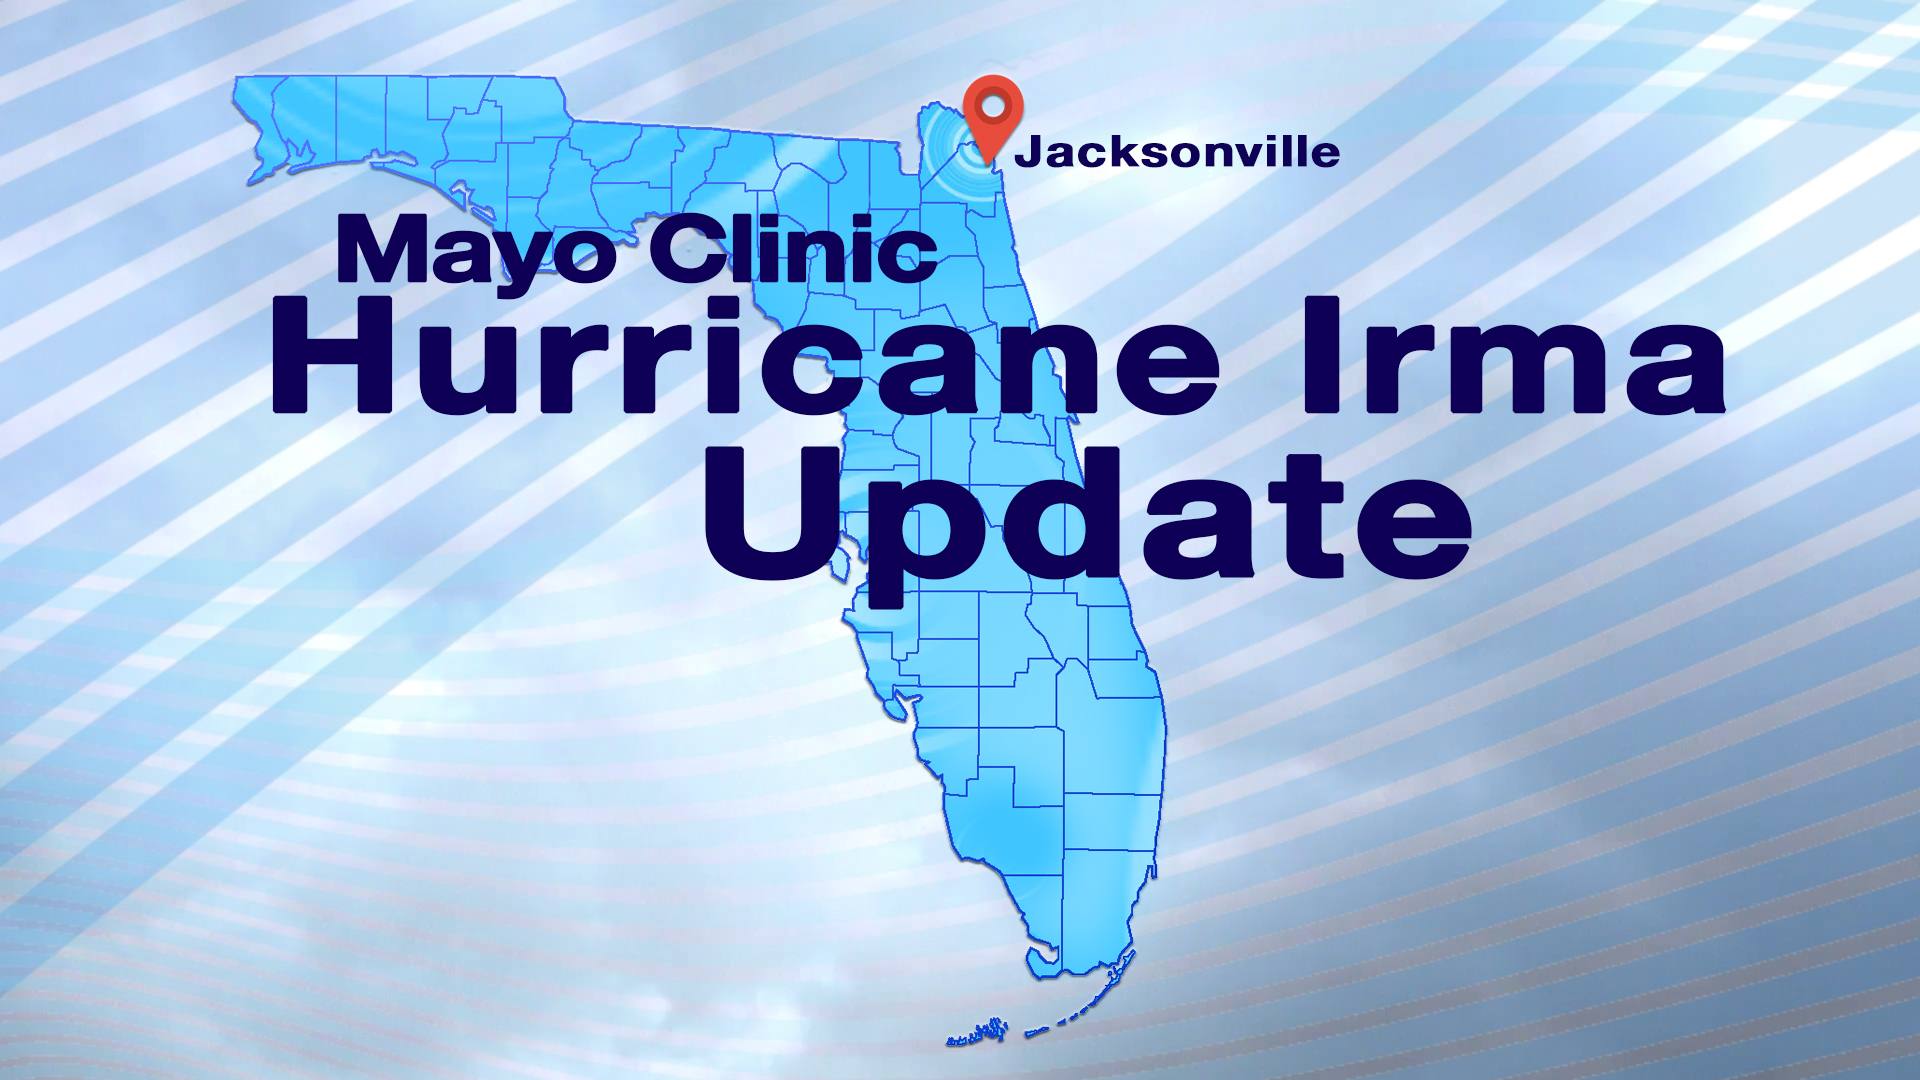 Hurricane Irma News Update Graphic with Florida map and Jacksonville locator